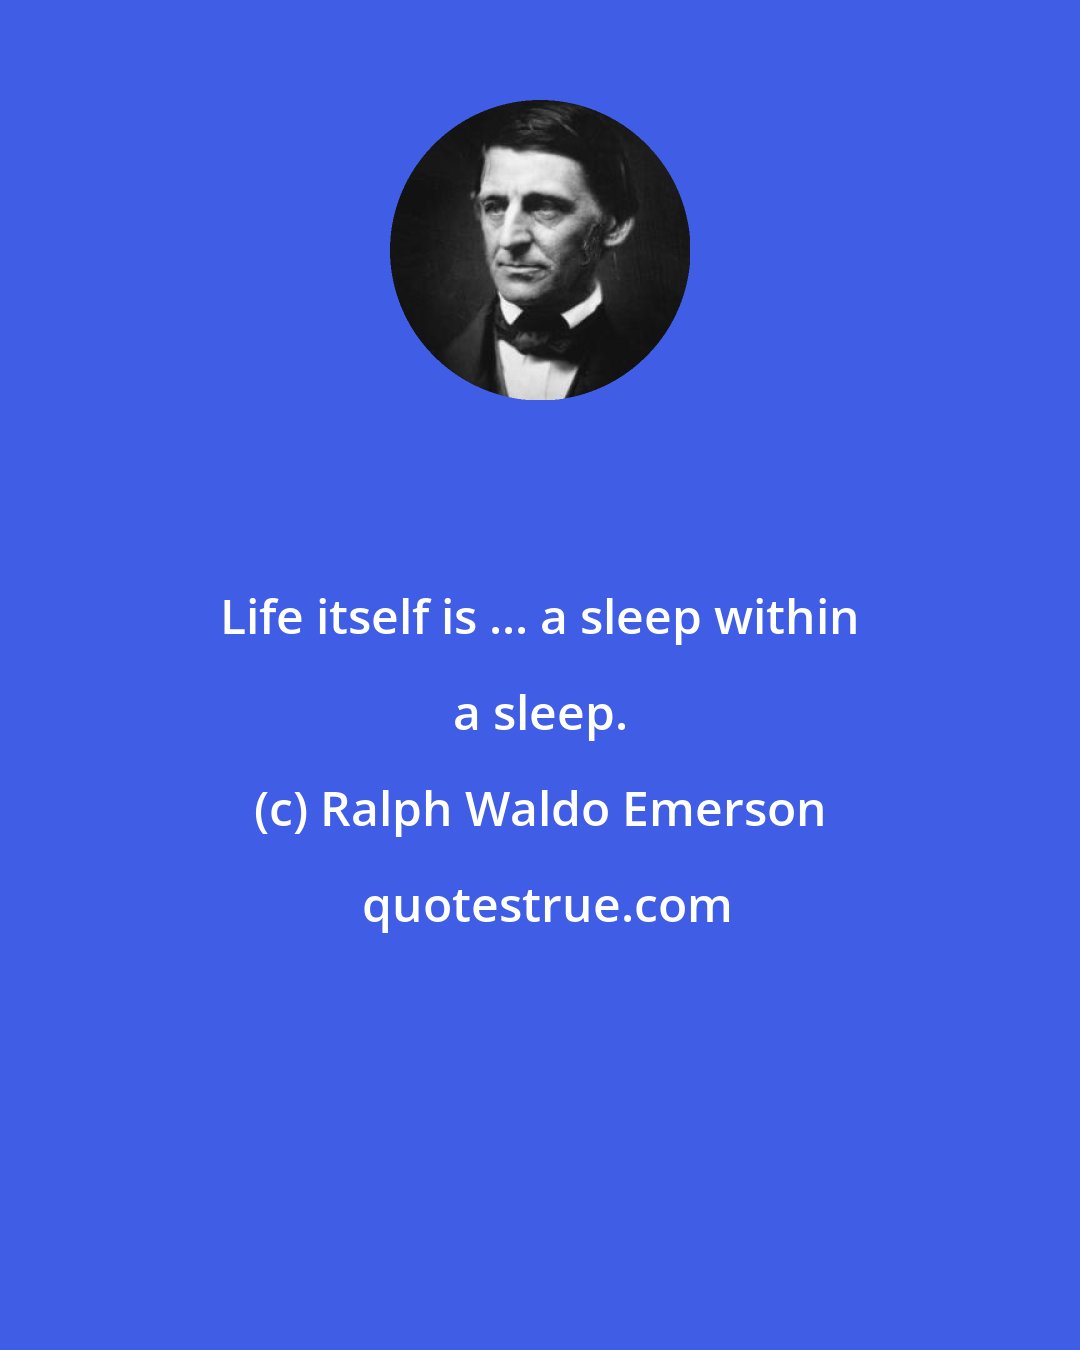 Ralph Waldo Emerson: Life itself is ... a sleep within a sleep.